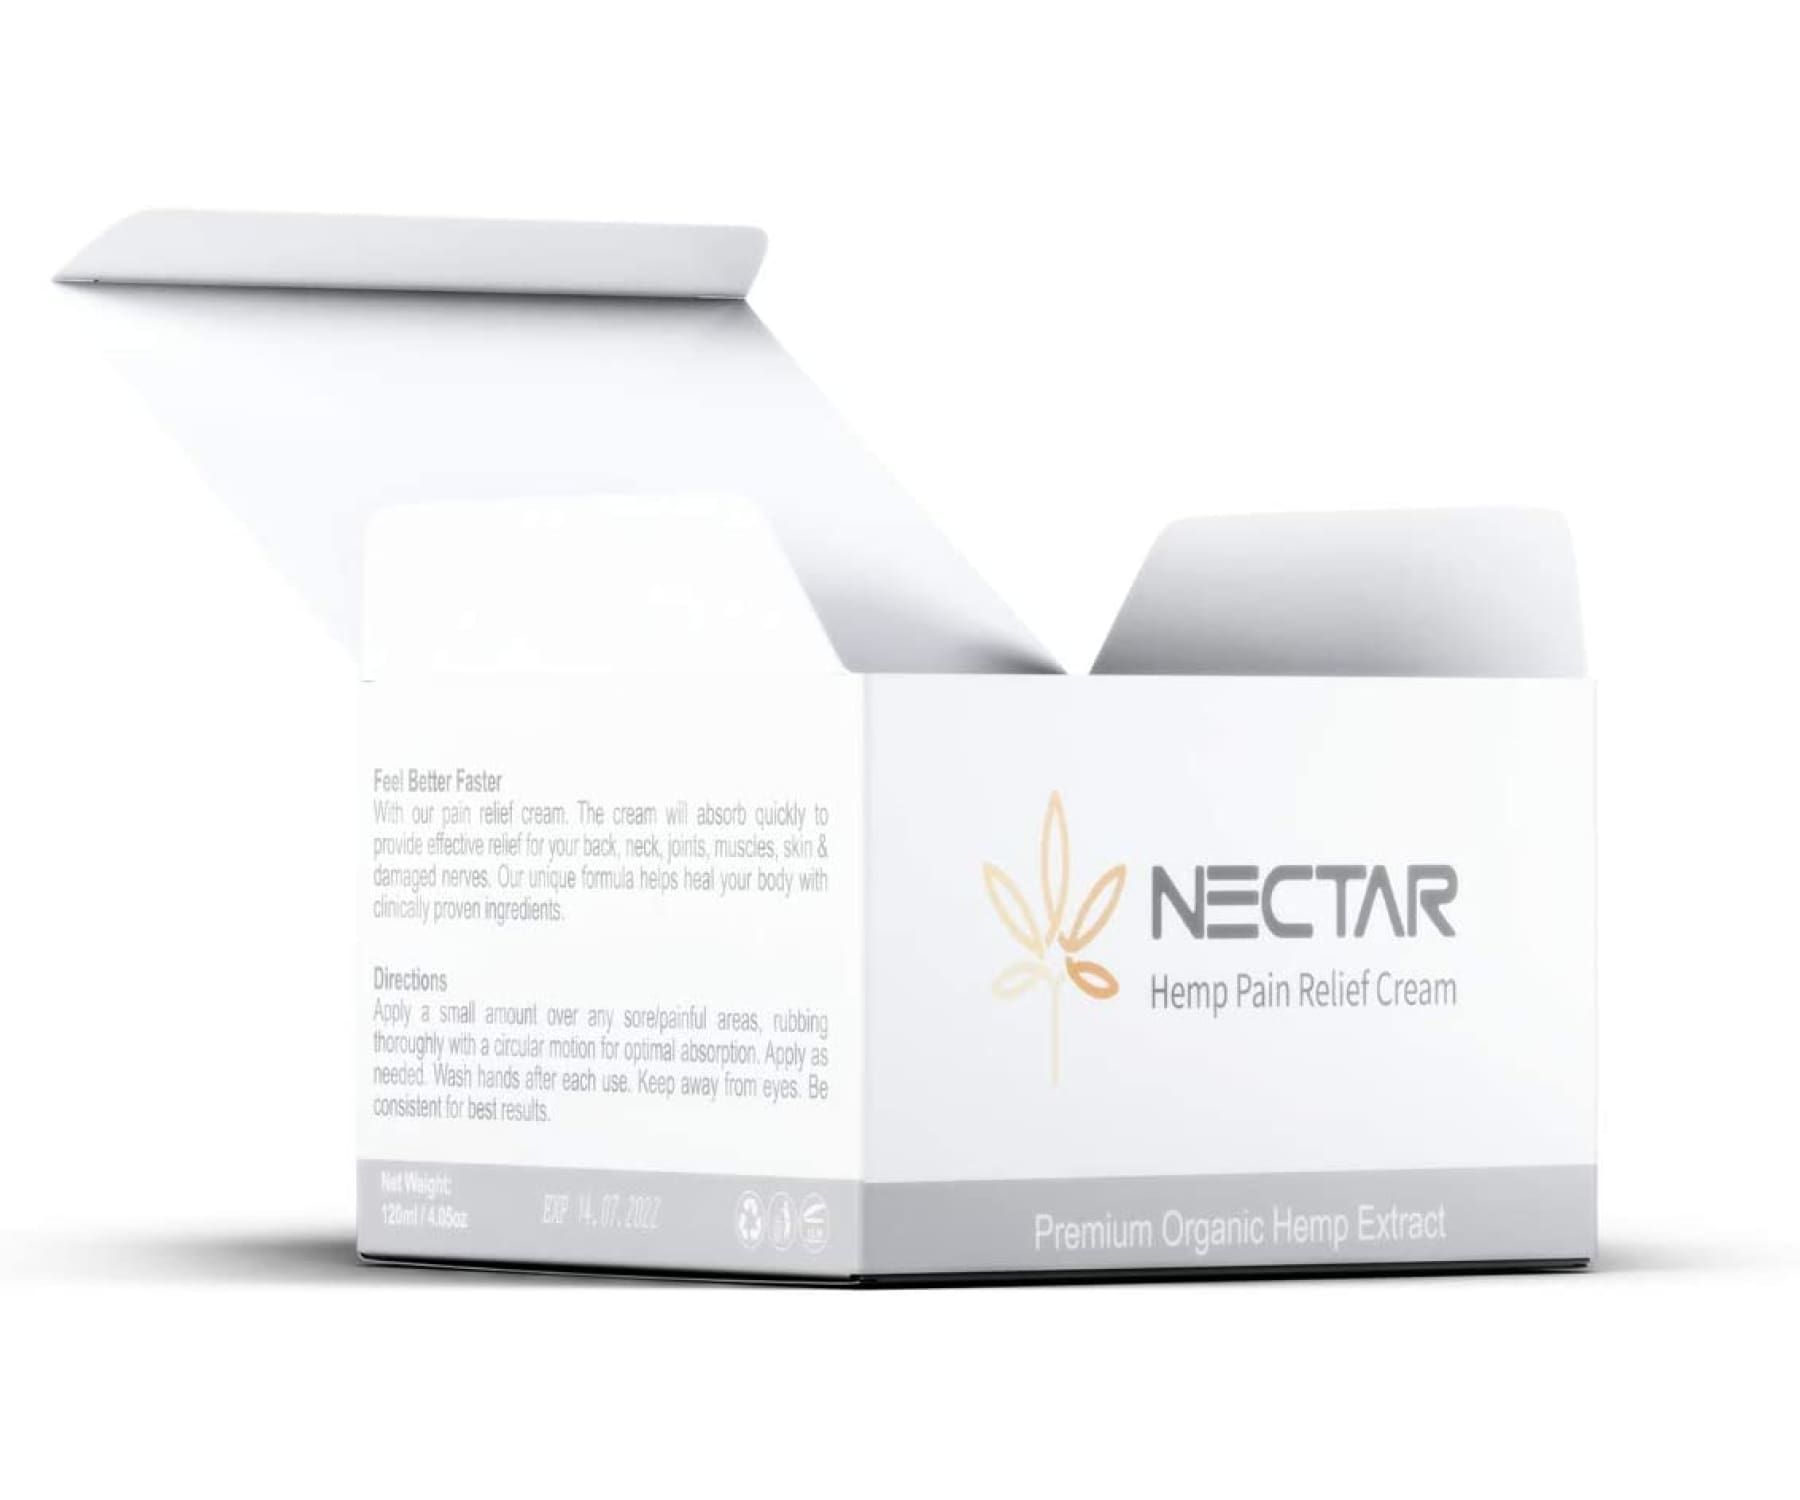 Nectar - Hemp Cream 7000mg Gelenke Creme mit Aloe Vera Arnica Eucalyptus und Jojoba